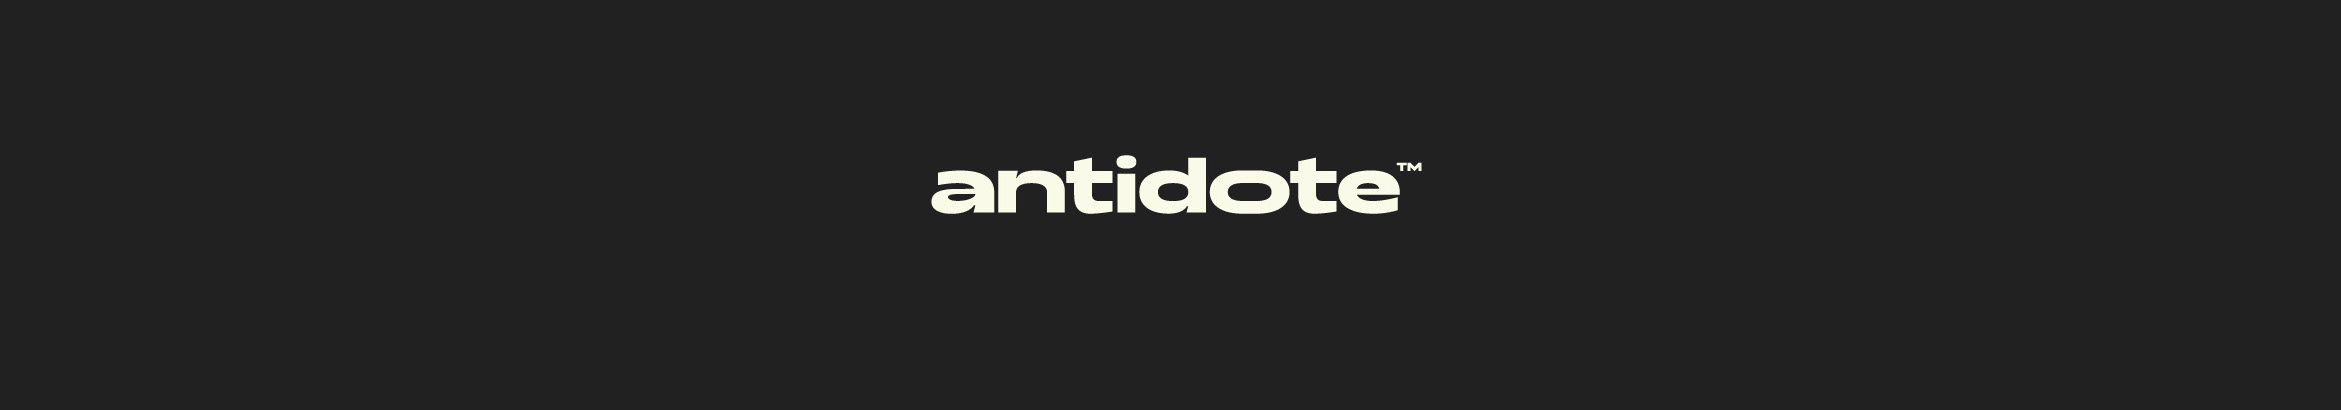 Antidote ™'s profile banner